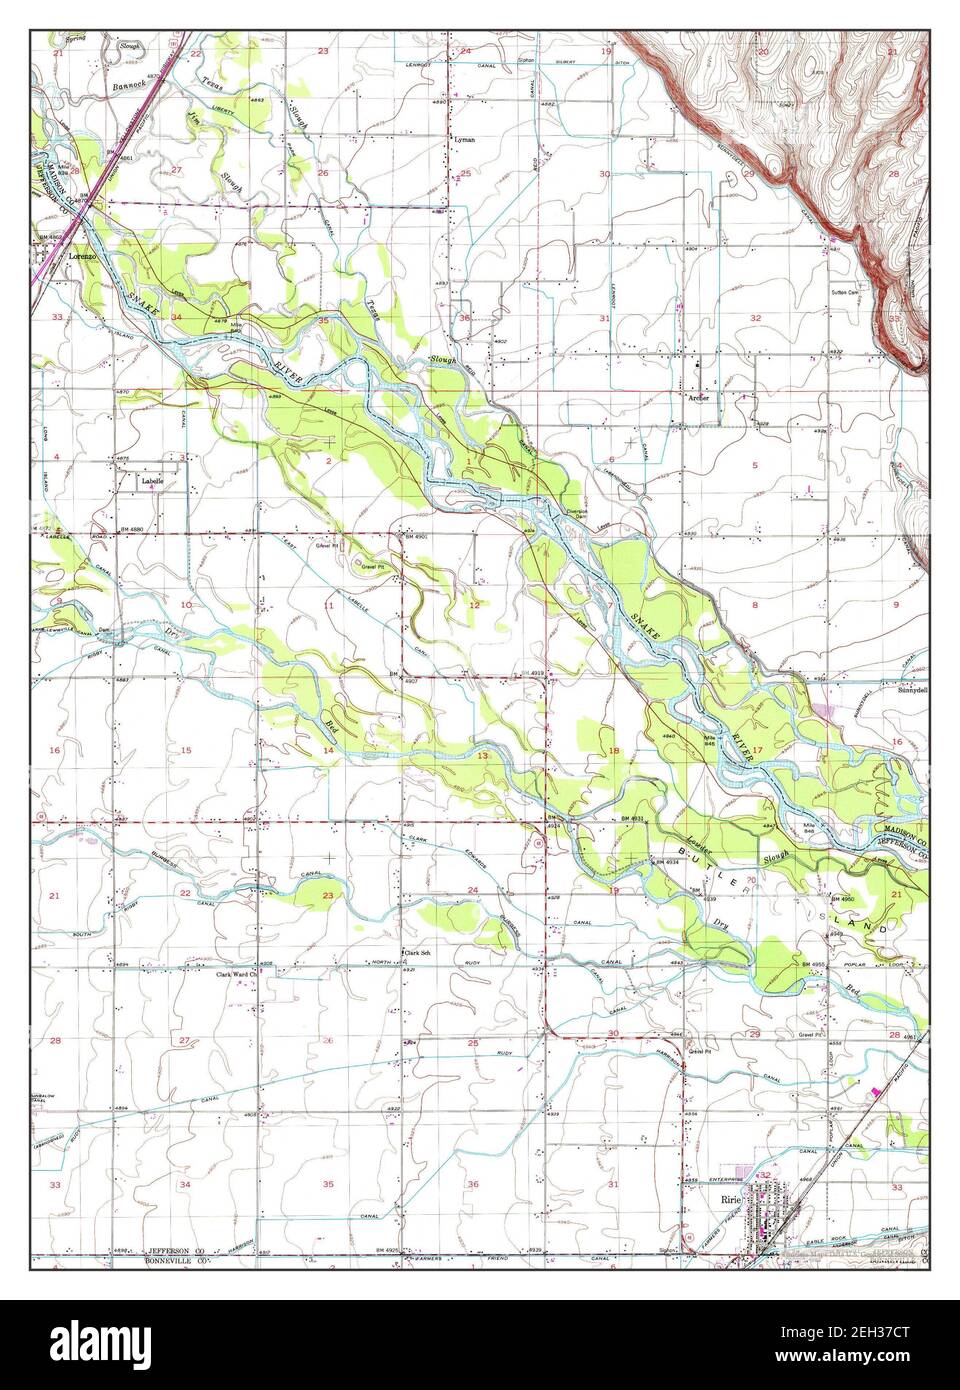 Ririe, Idaho, map 1950, 1:24000, United States of America by Timeless Maps, data U.S. Geological Survey Stock Photo